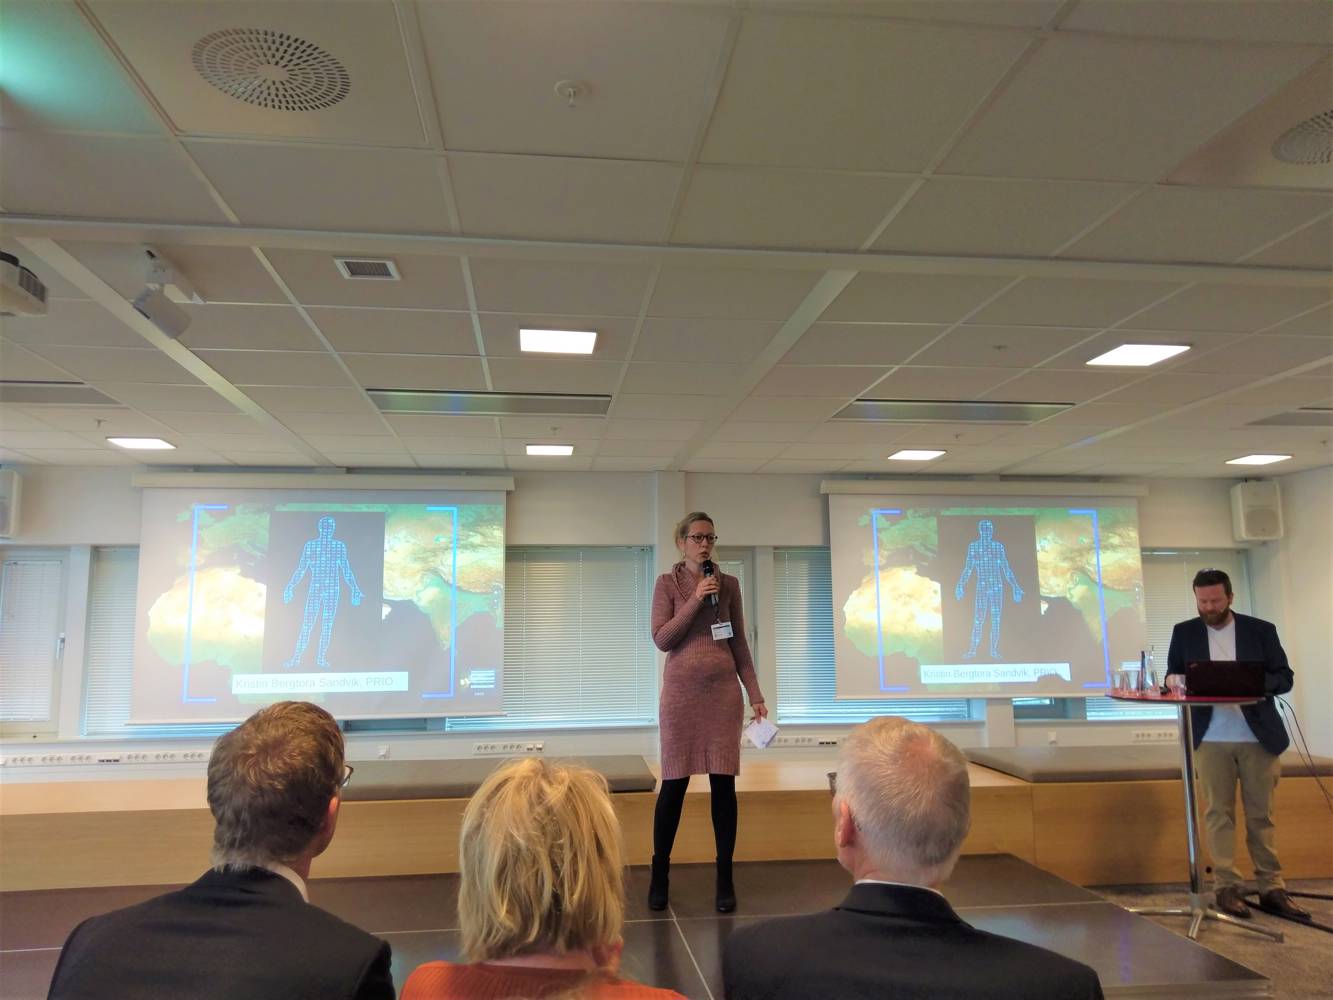 Kristin Bergtora Sandvik presents her project Do No Harm on April 25. Photo: Øystein H. Rolandsen / PRIO